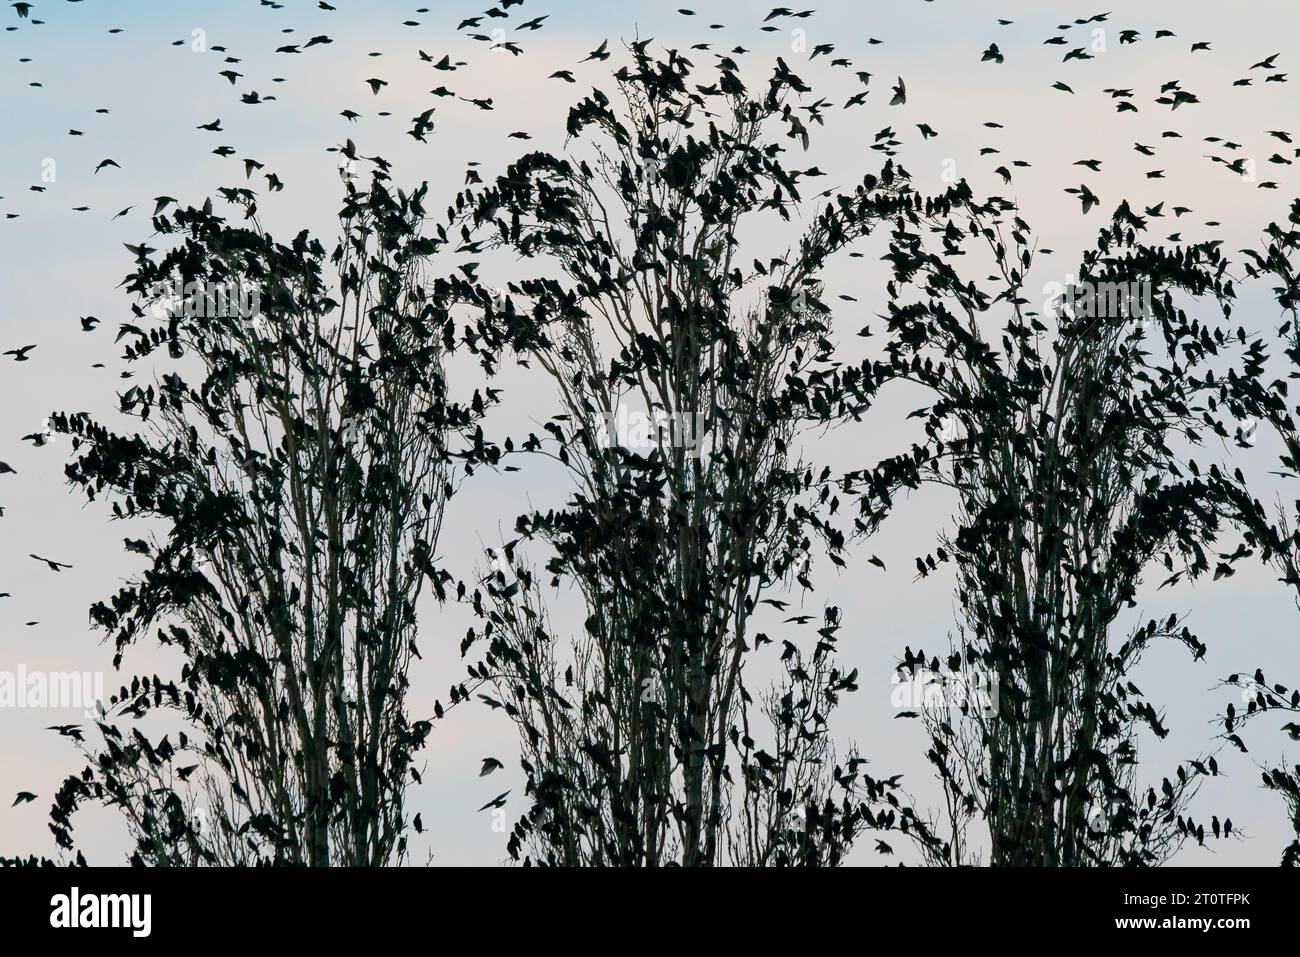 Many Starlings (Sturnus vulgaris) in a Tree. Flock of starlings birds fly in the Netherlands. Starling murmurations. Stock Photo